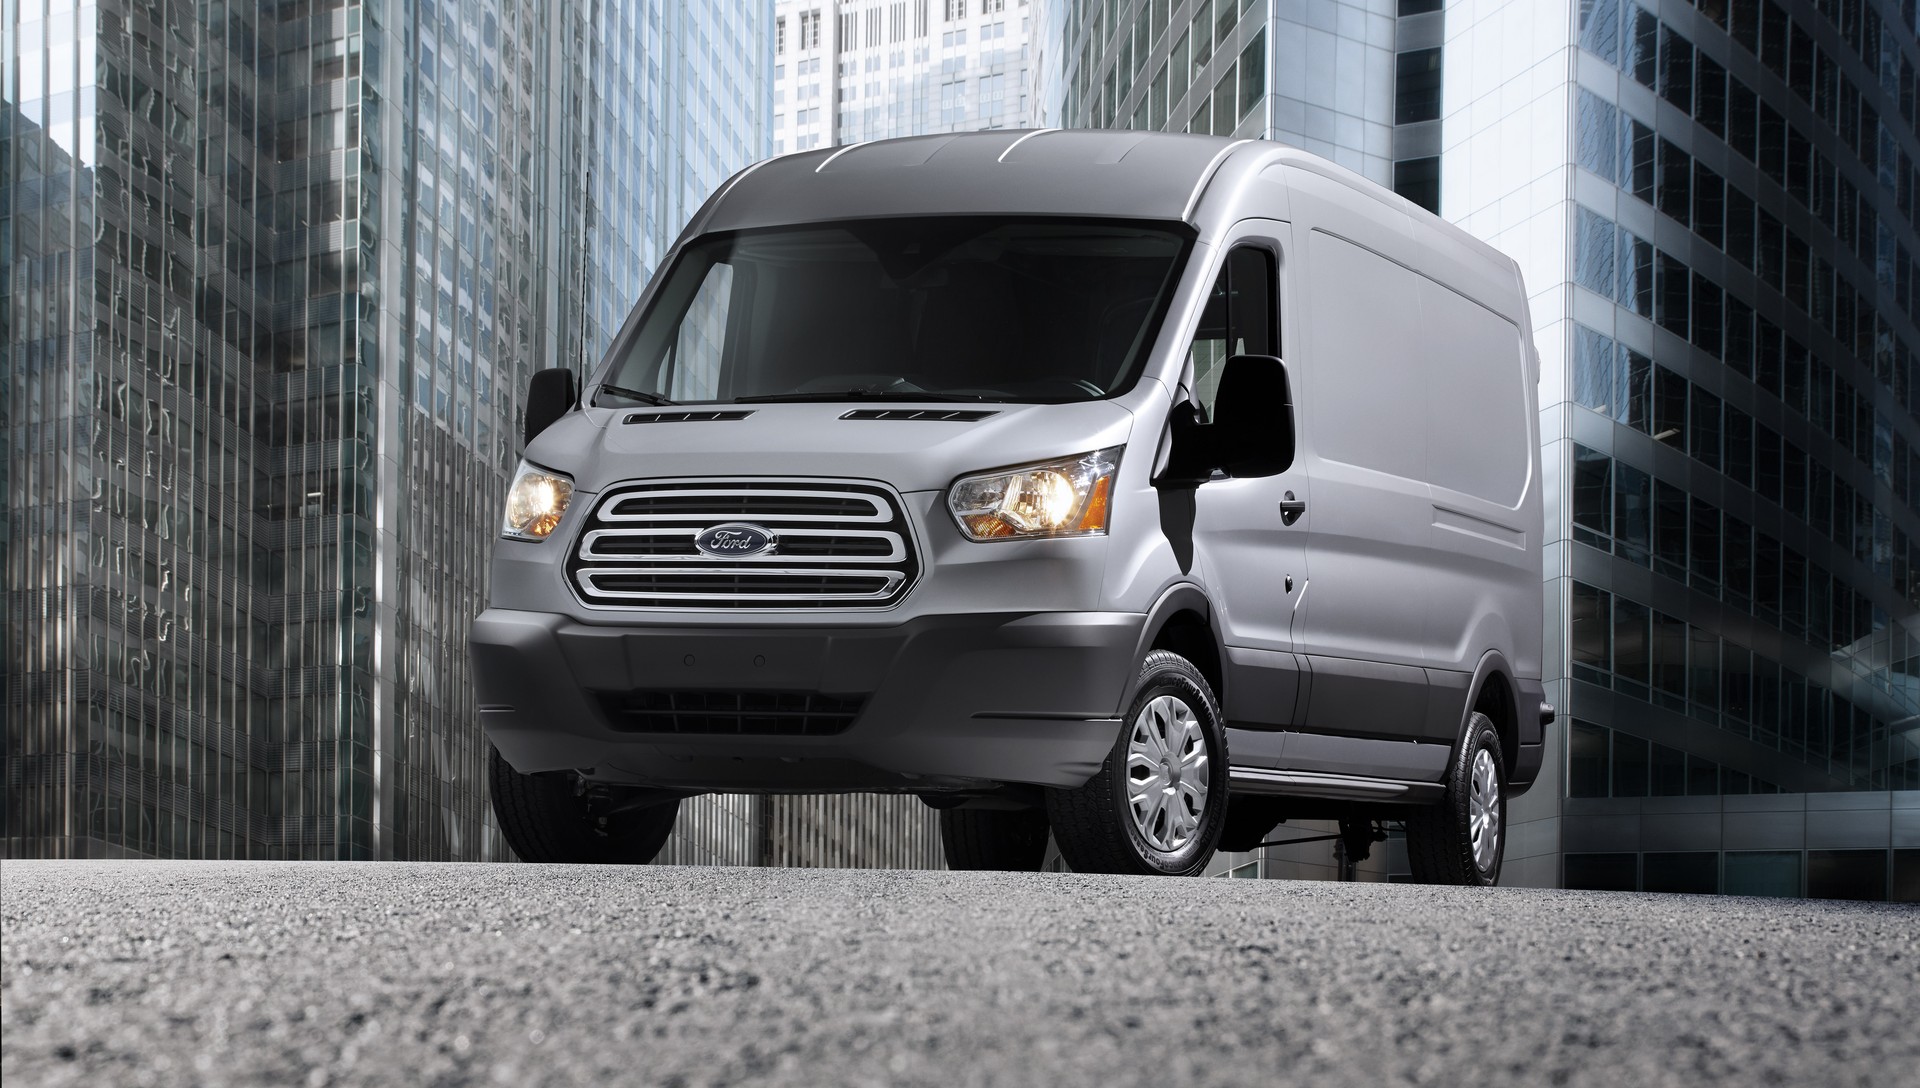 Transit Van Gets Add-In Hybrid Kit For Better Fuel Economy